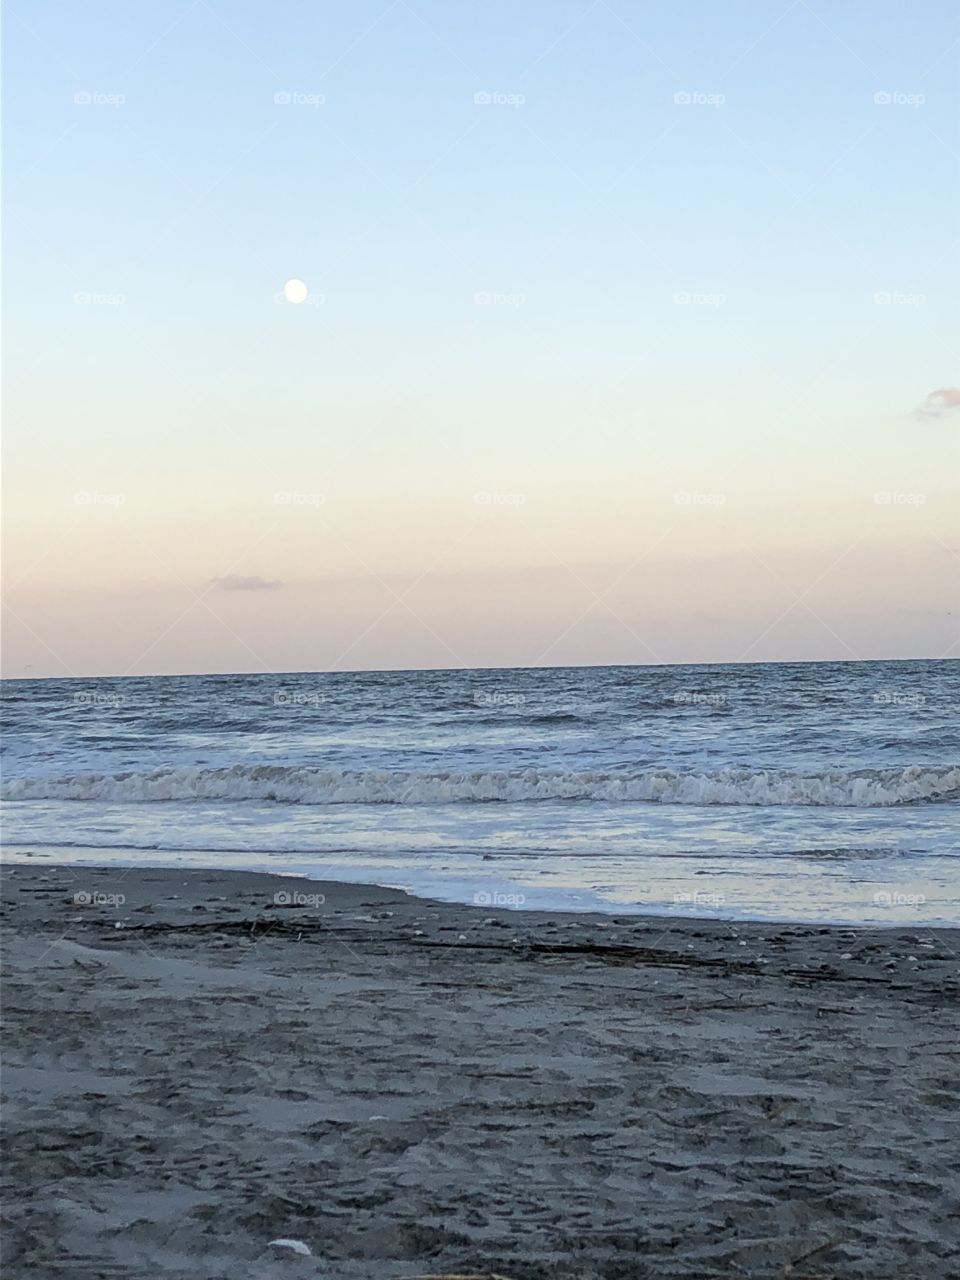 A rare sighting - full moon at sunset on the beach. Awestruck and happy. Folly Beach, South Carolina